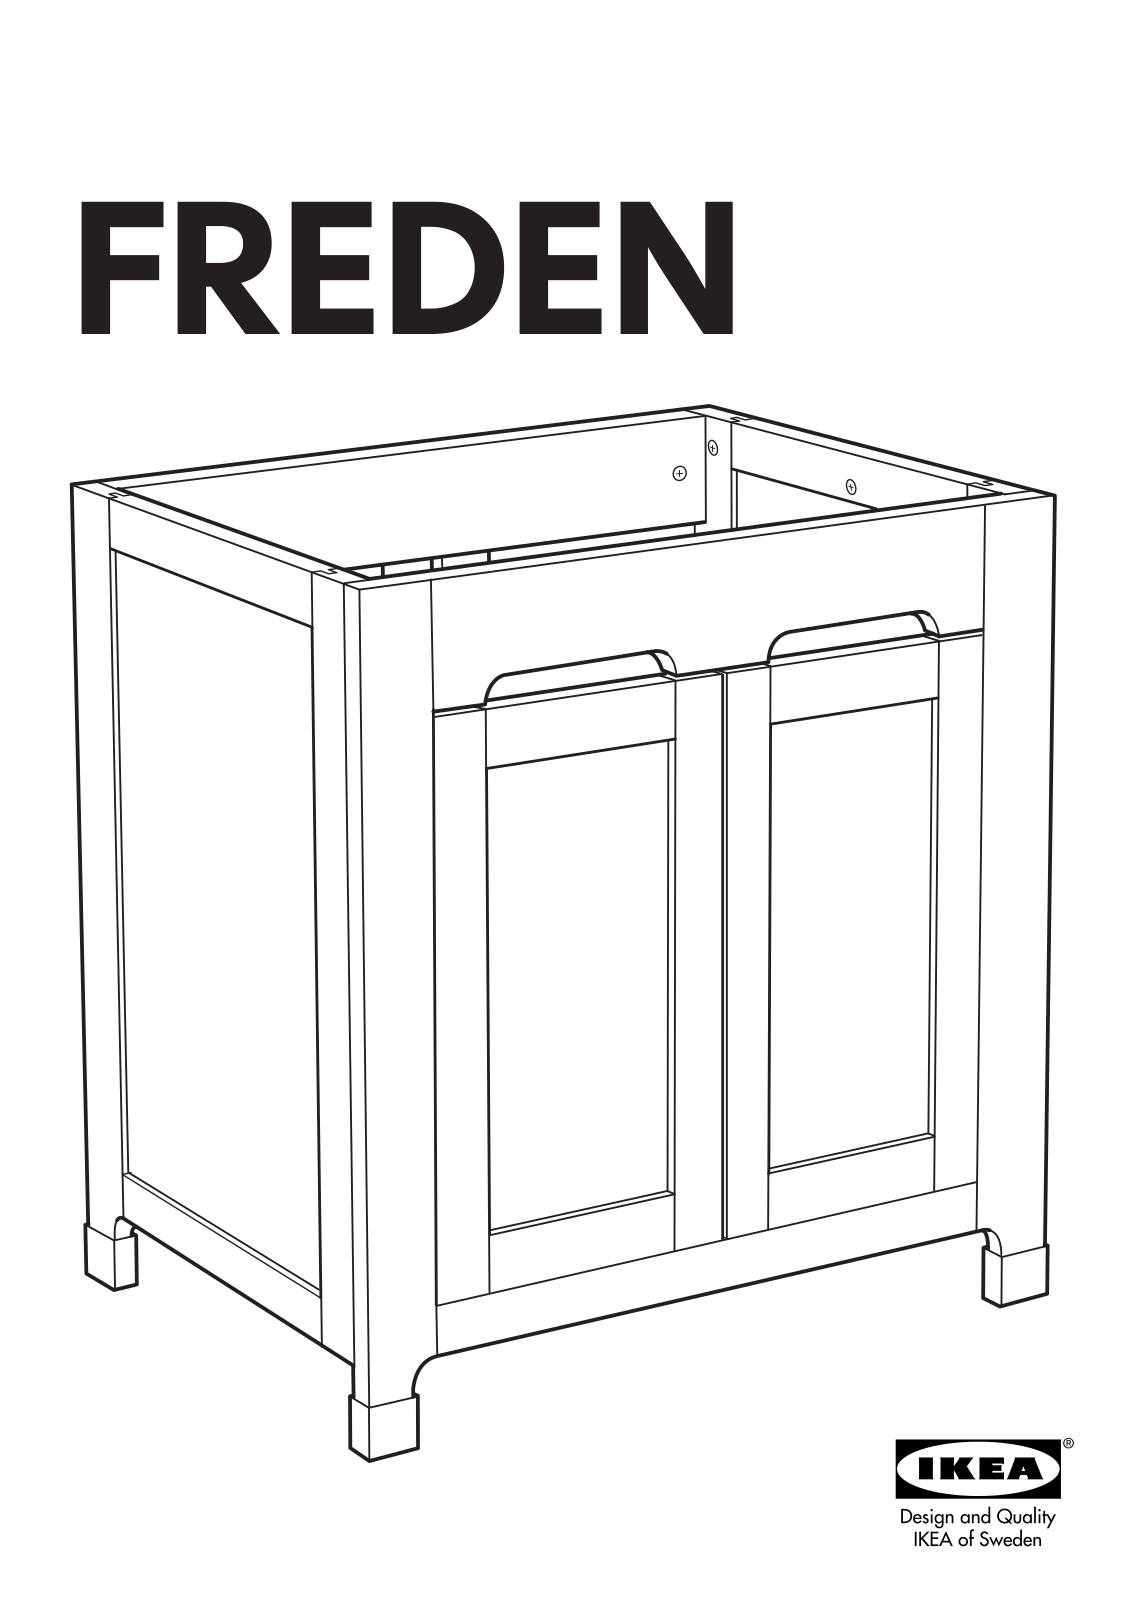 IKEA FREDEN SINK CABINET Assembly Instruction